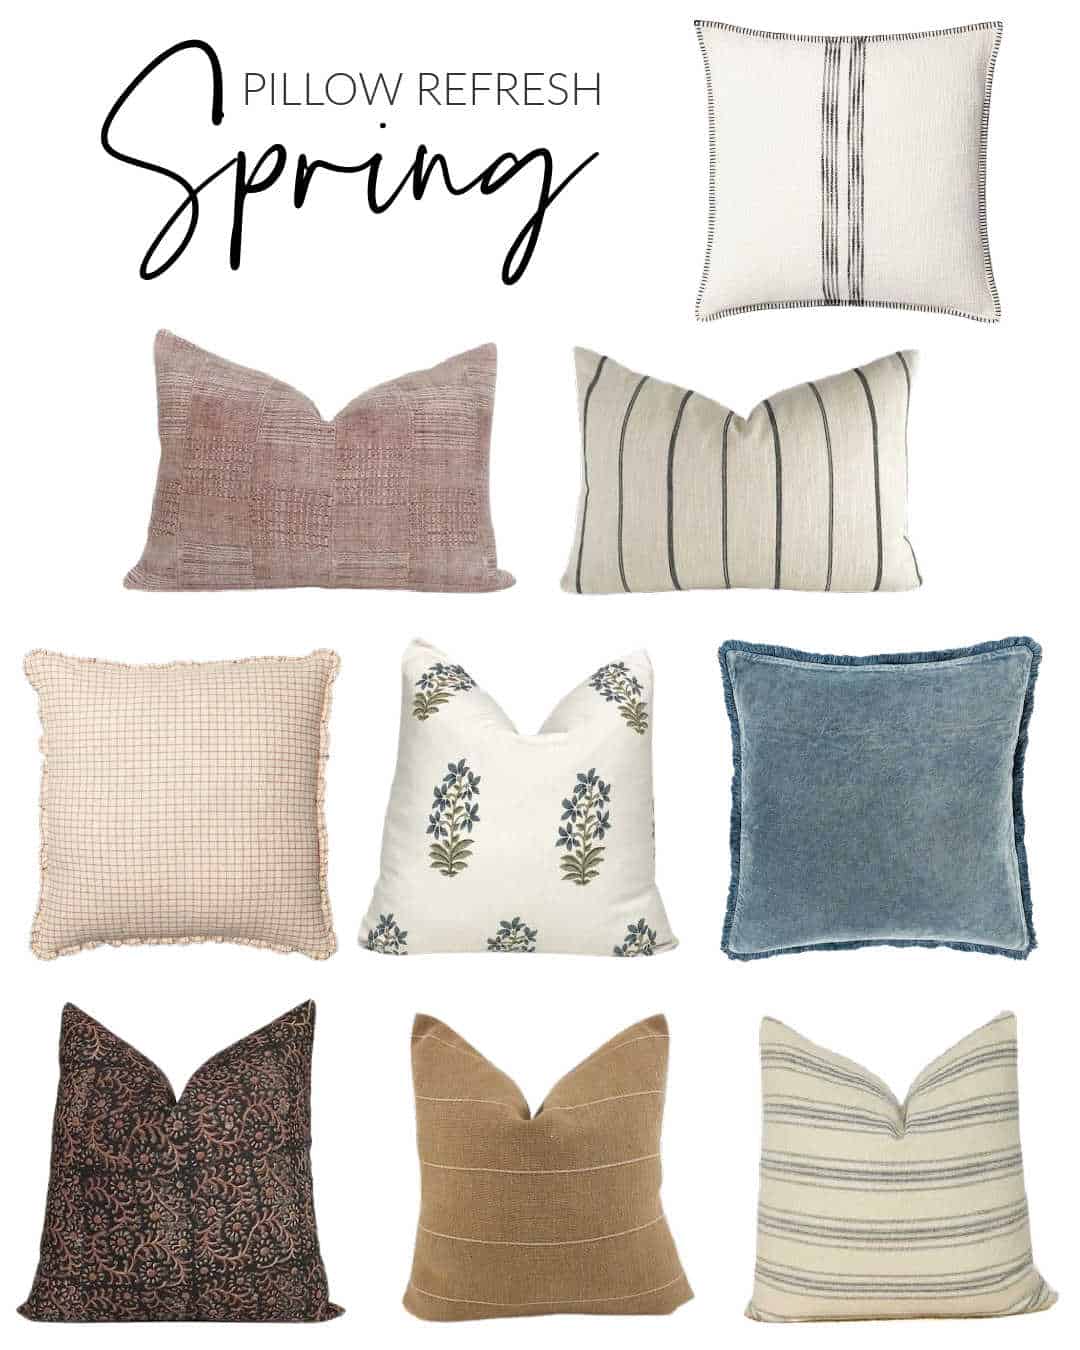 Spring throw pillow options